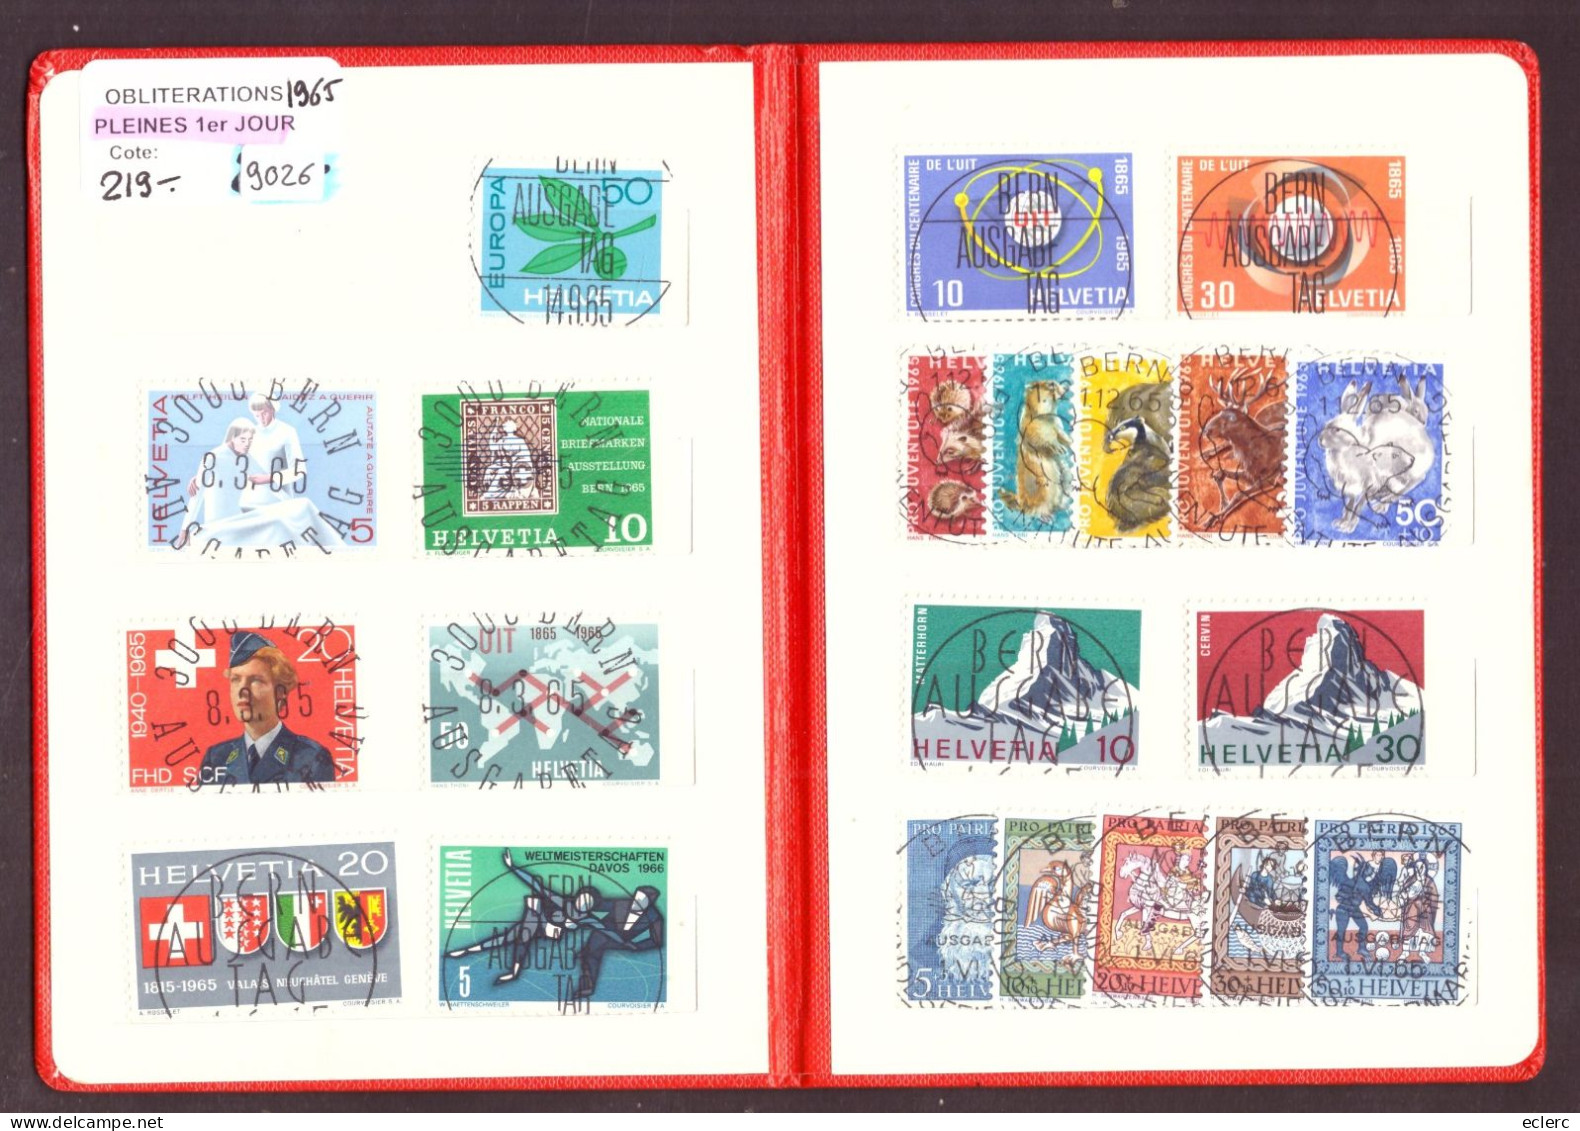 ANNEE COMPLETE 1965 - OBLITERATIONS PLEINES 1er JOUR - ERSTTAG VOLL STEMPELN - COTE: 219.- - Used Stamps